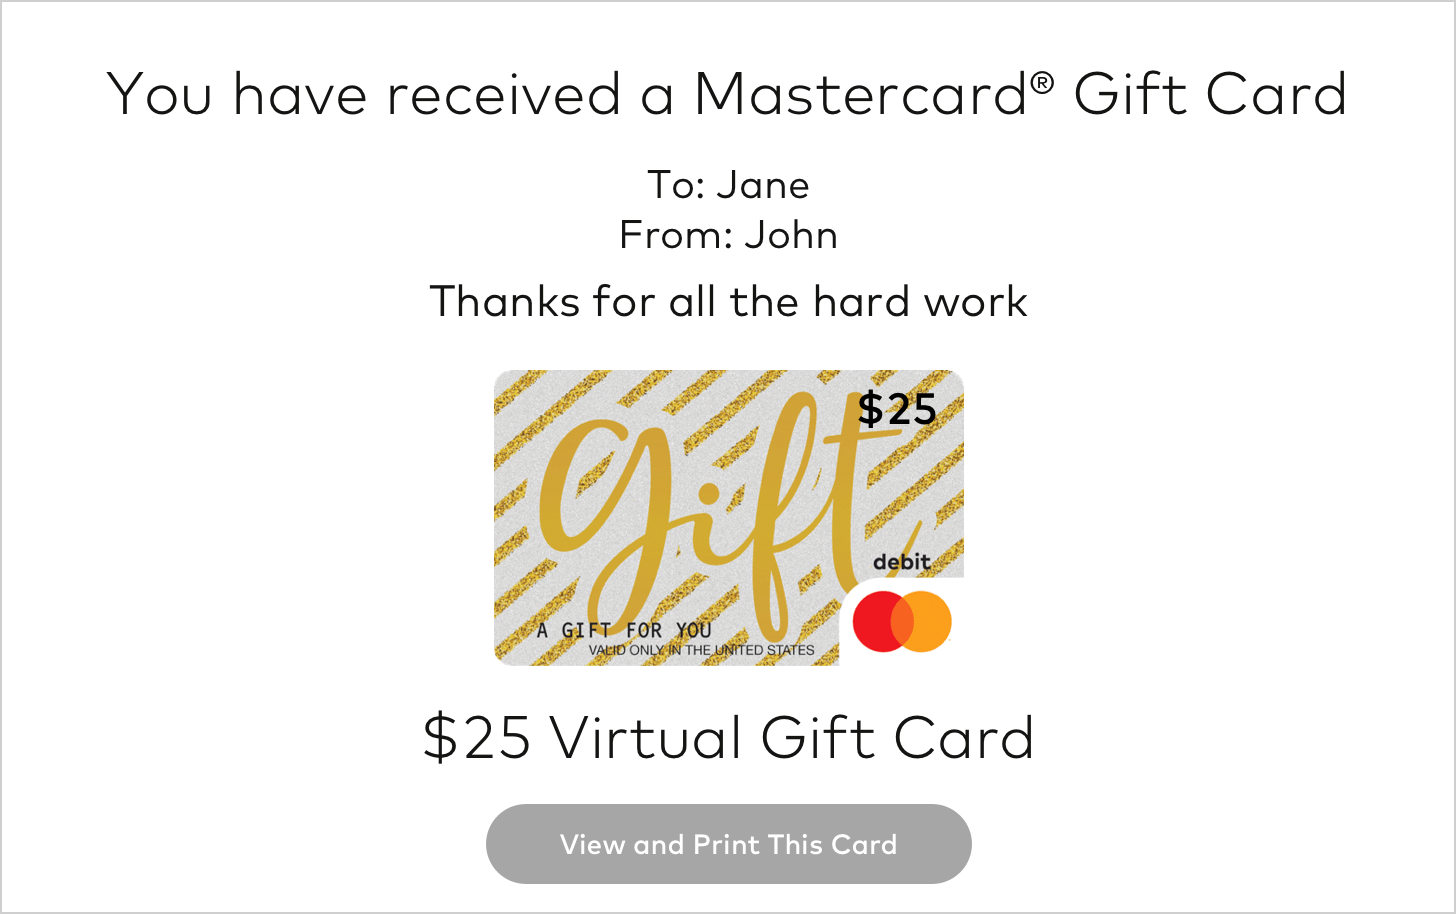 A $25 virtual Mastercard gift card